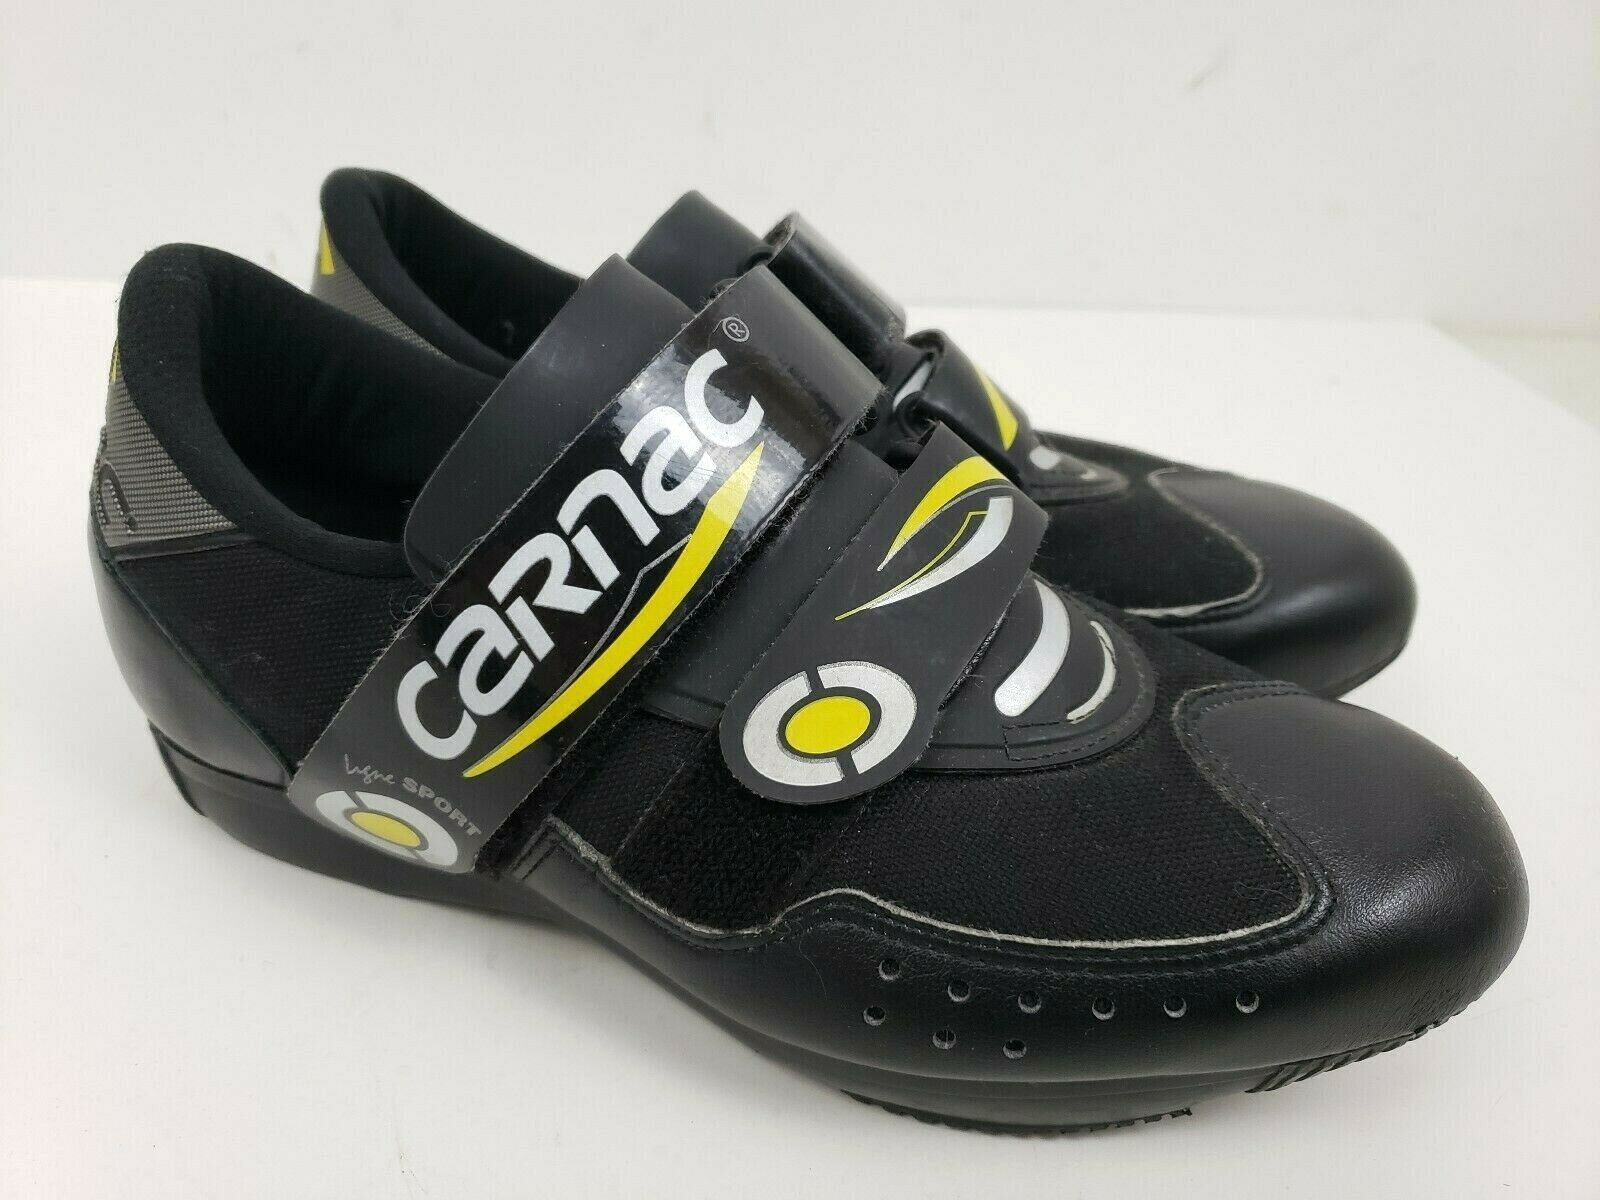 Carnac Women's Cycling Bicycle Bike Shoes Black Size 7.5 No Hardware ...